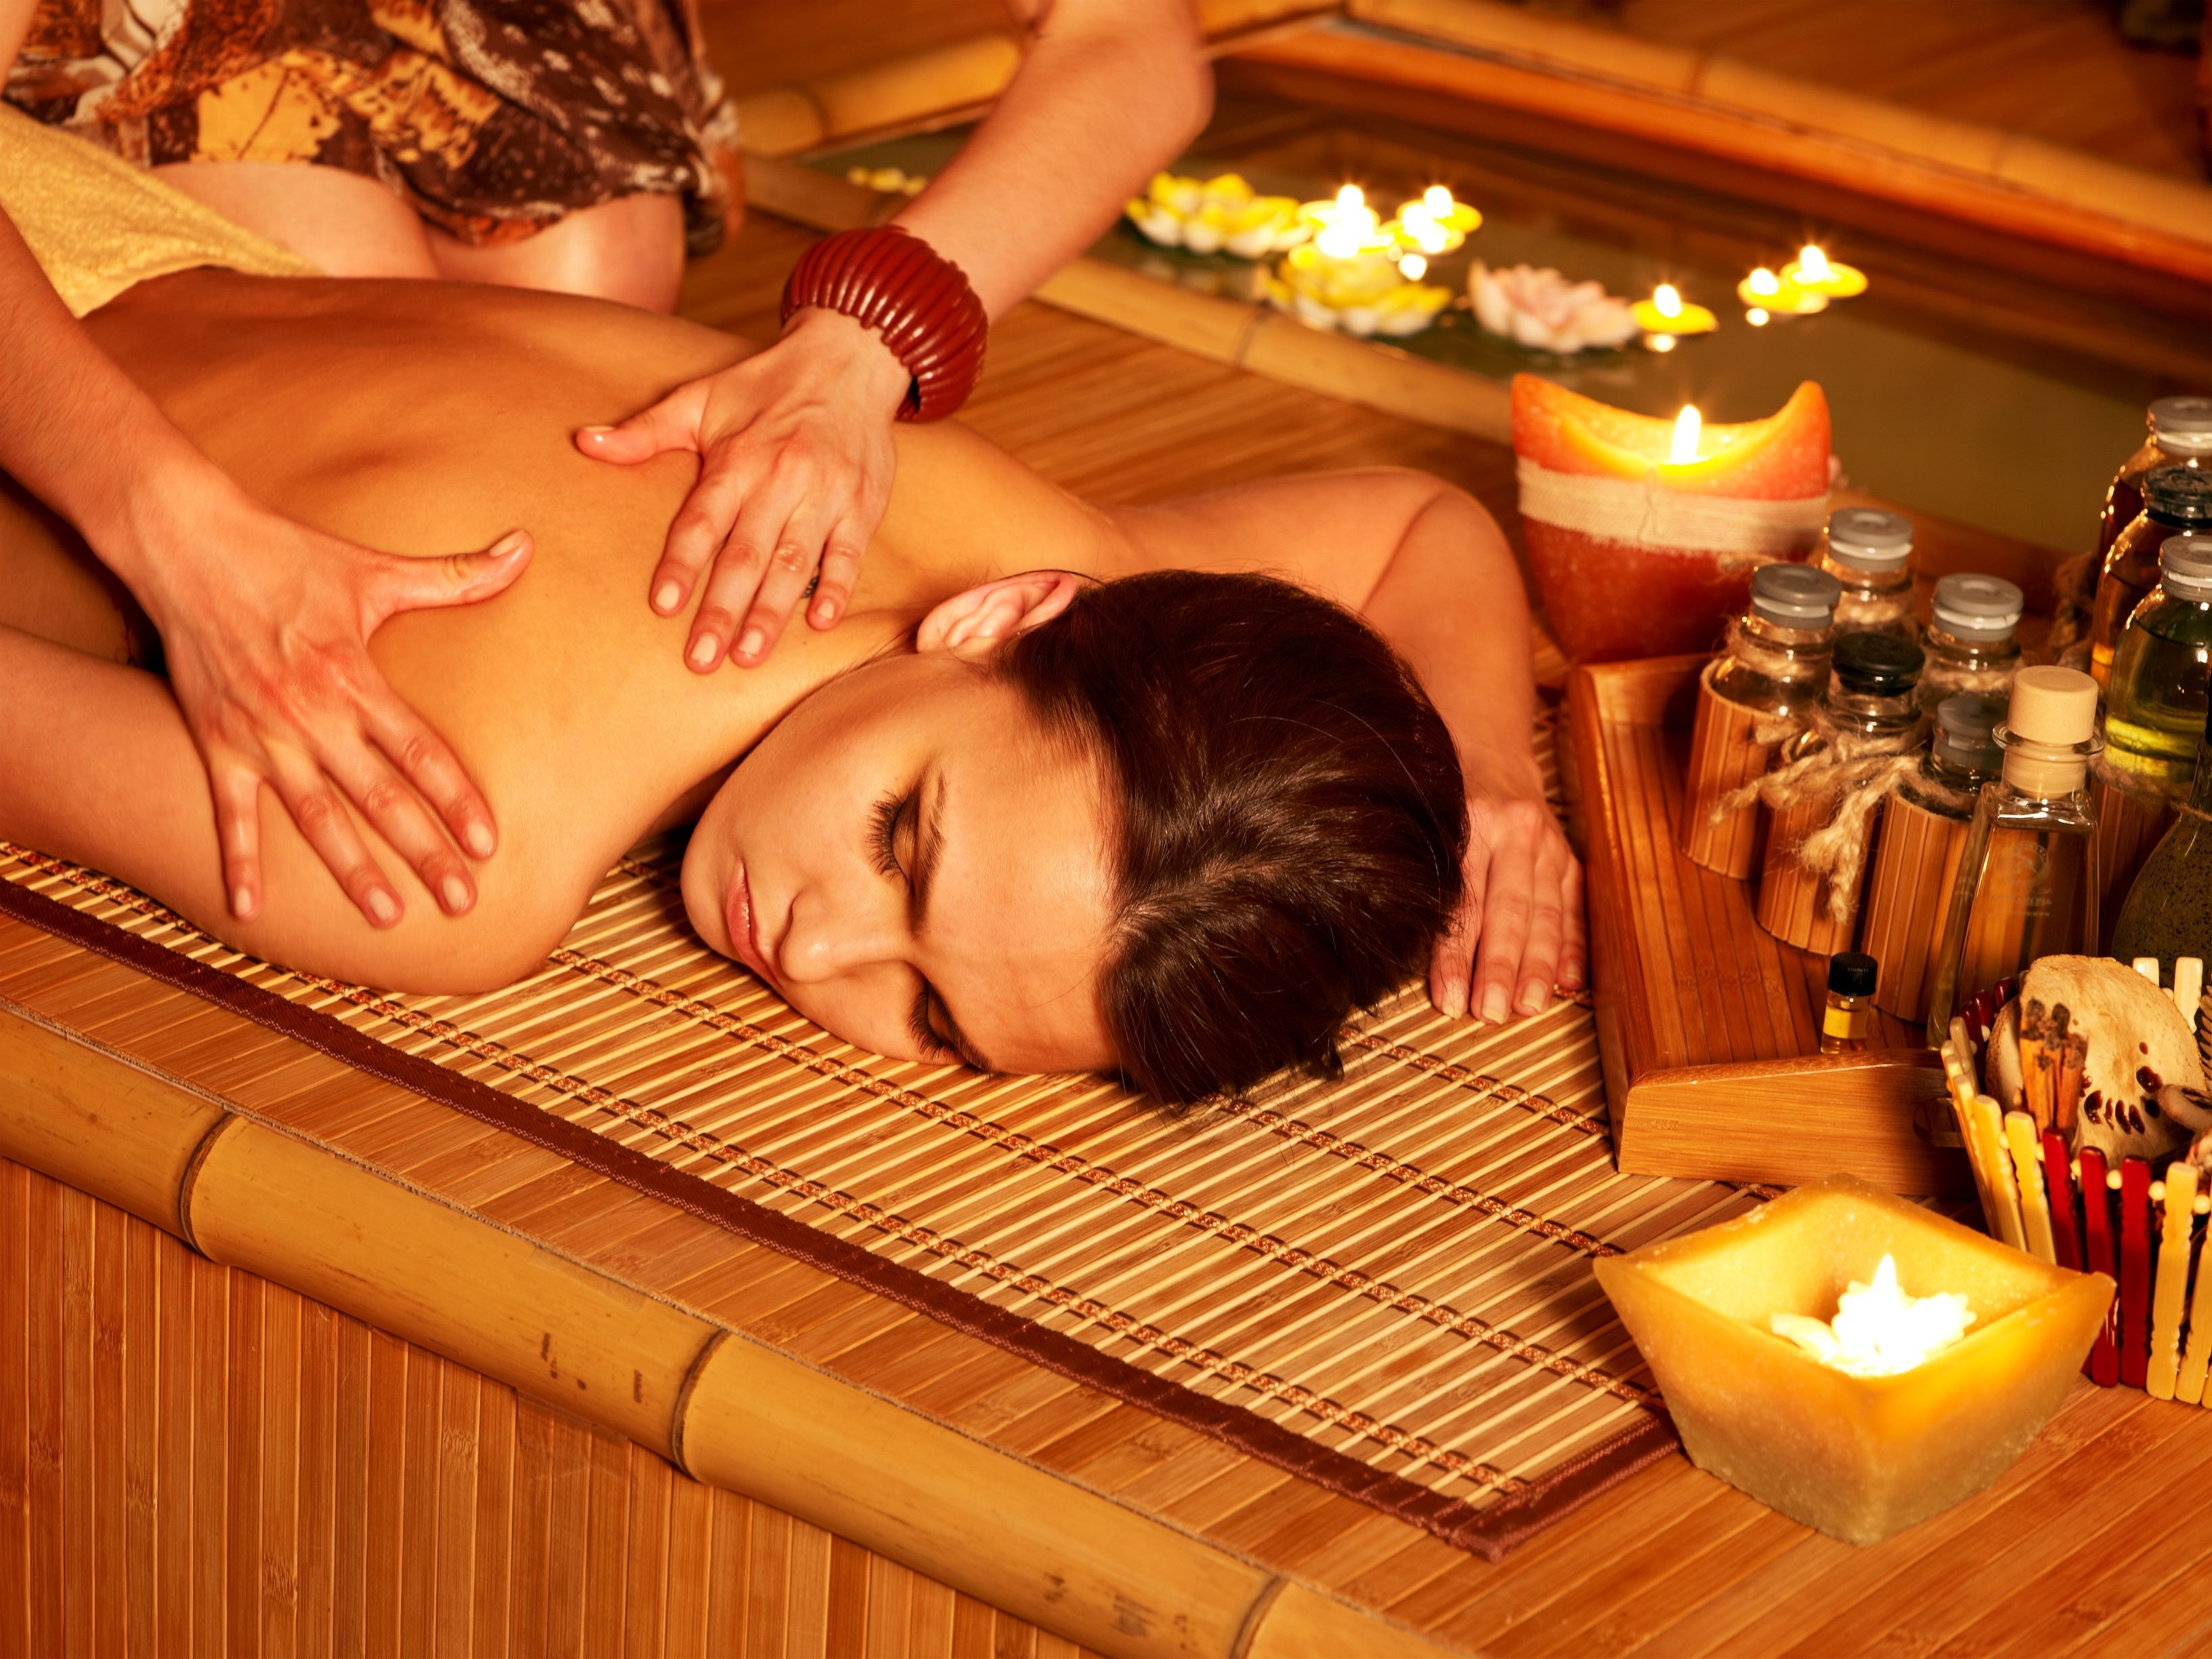 Салон массажа relax. Тайский спа-салон «золотой Таиланд». Традиционный тайский массаж. Тайский массаж спины. Женский массаж.